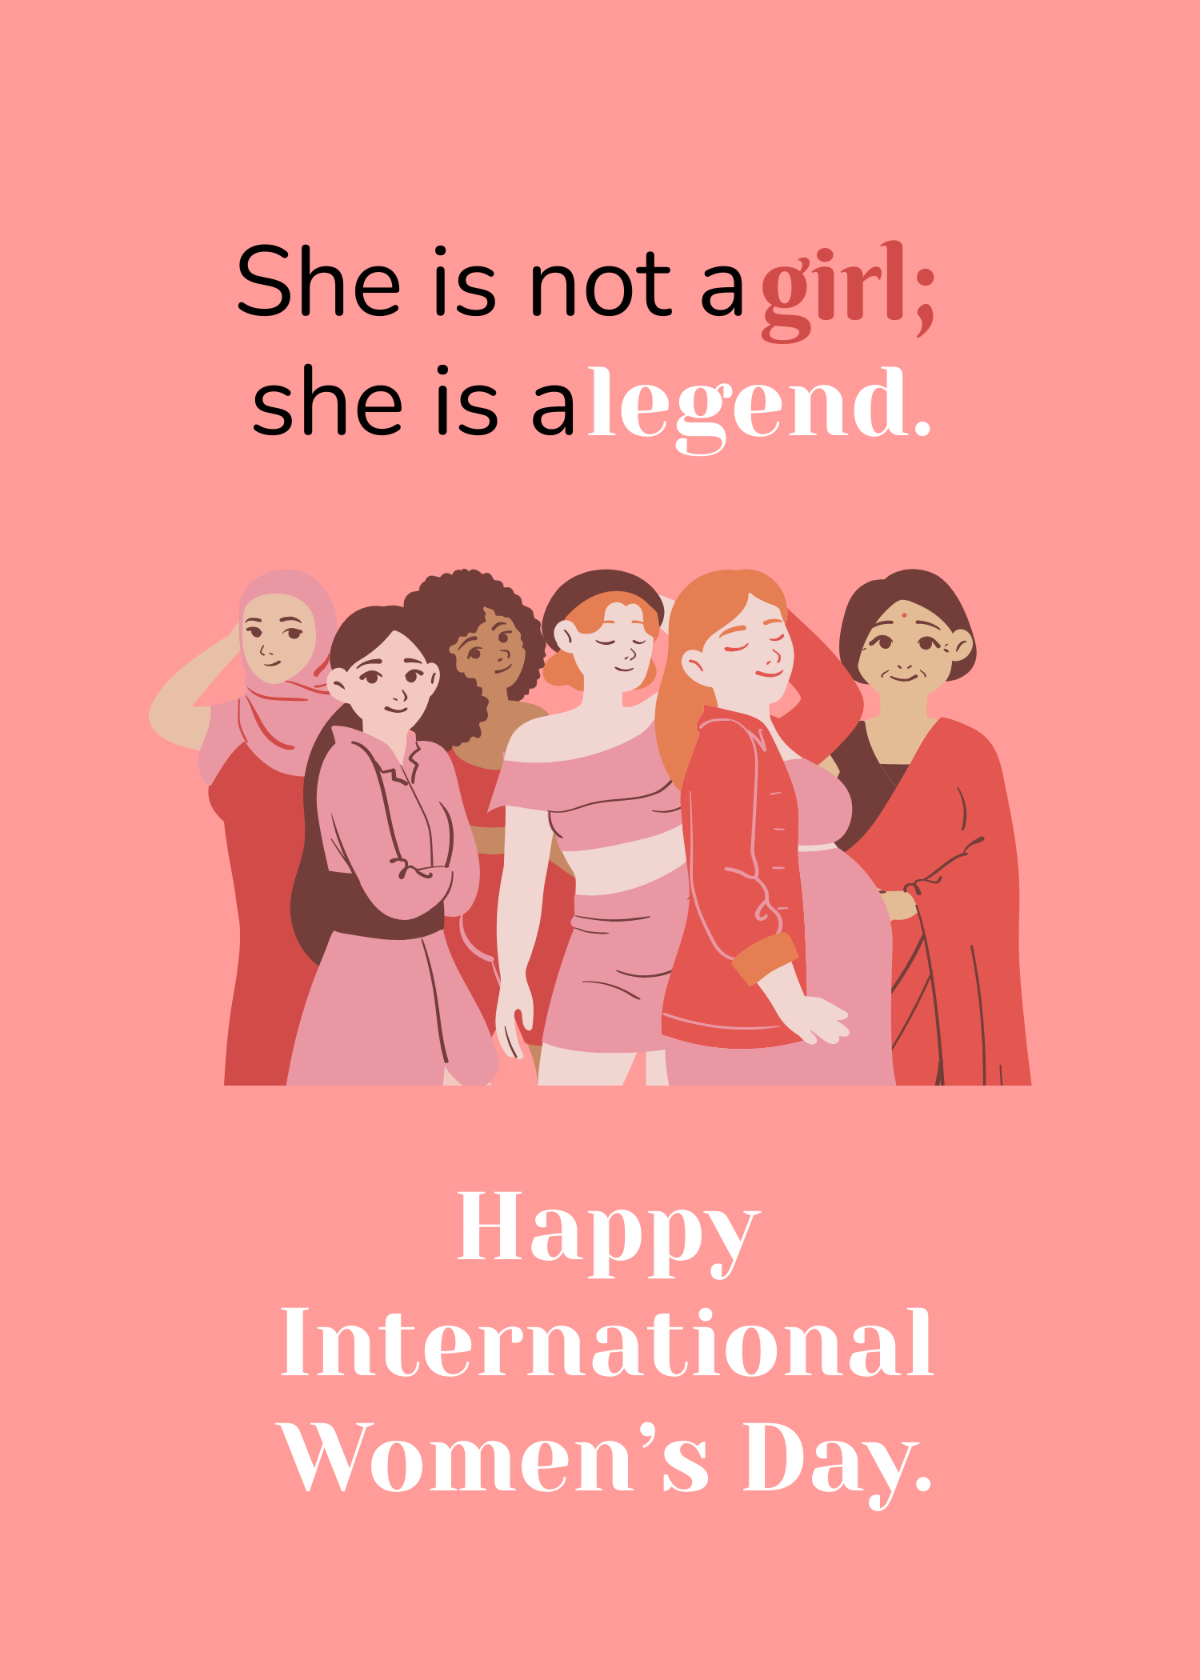 International Women's Day Greetings